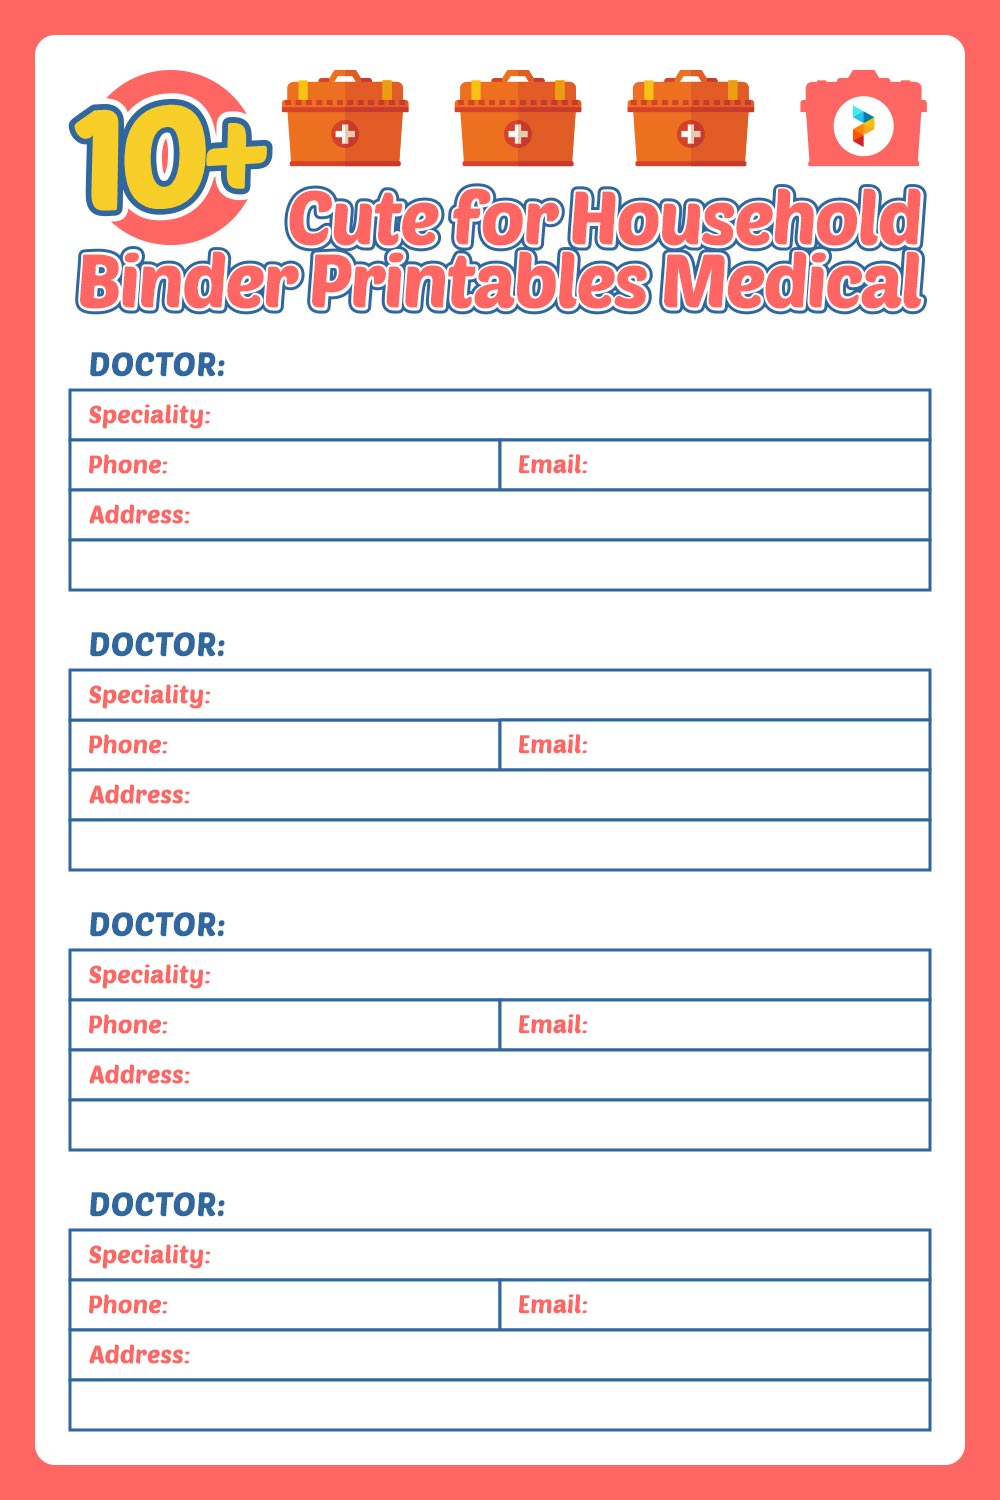 Cute For Household Binder Printables Medical